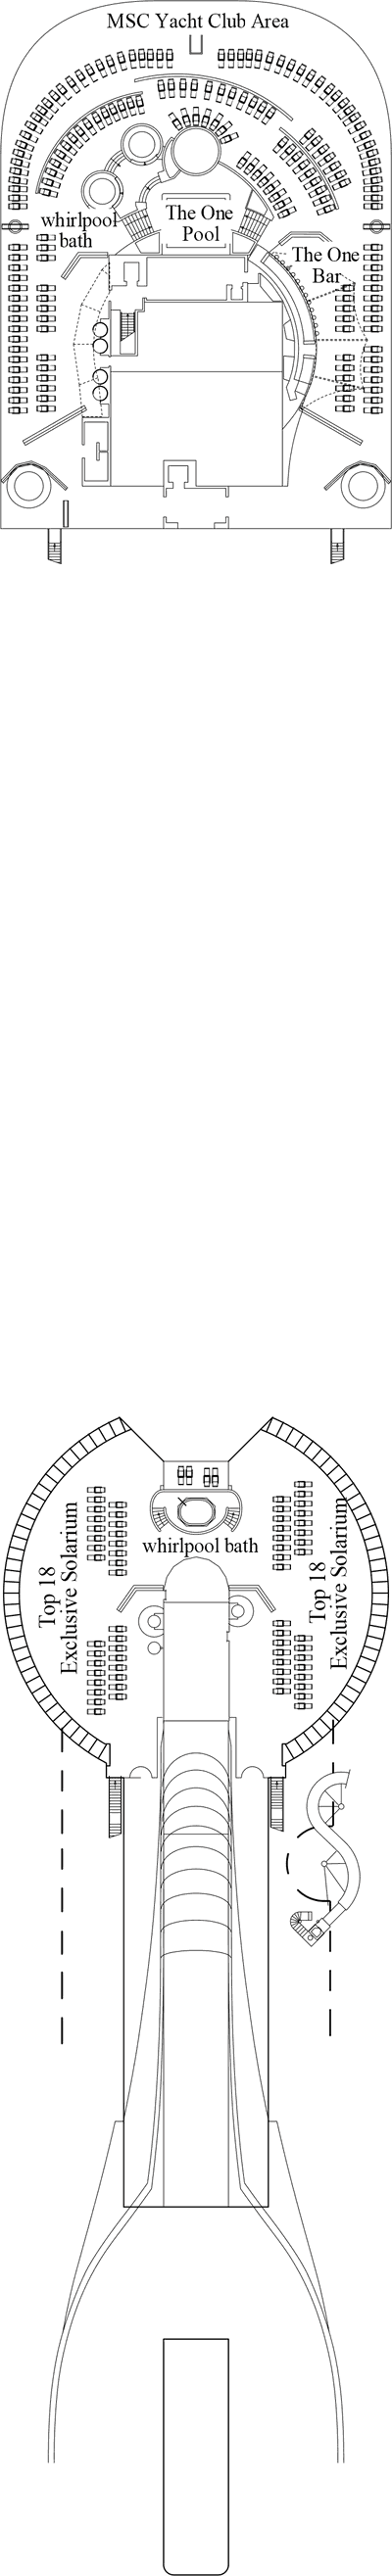 MSC Divina - Decksplan Deck 18